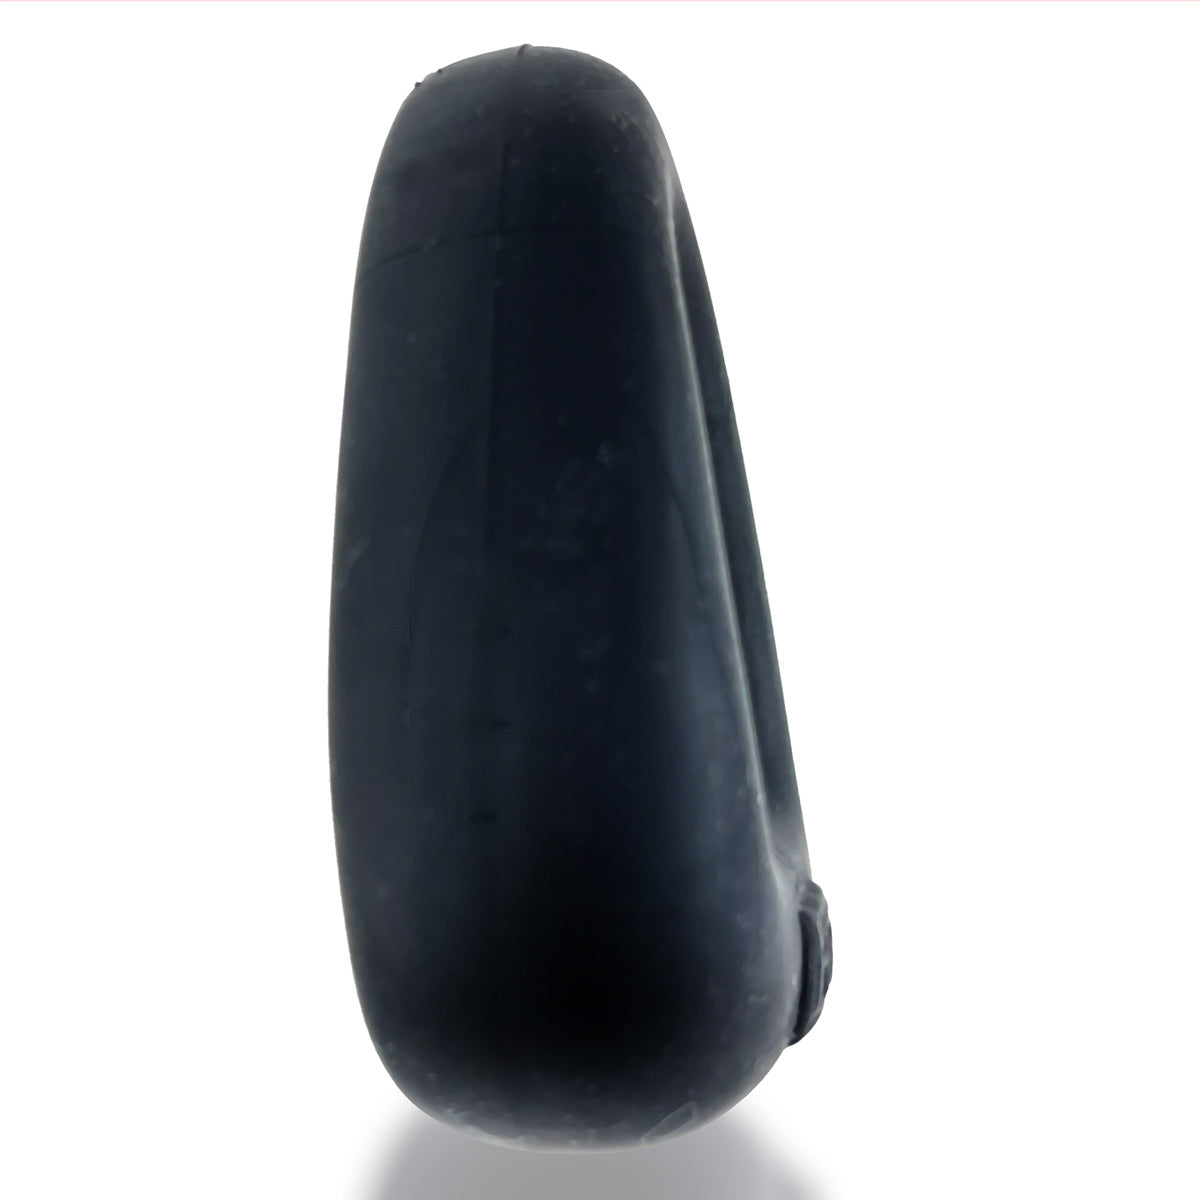 Oxballs - Hünkyjunk™ - Zoid Lifter Bulge Cockring – Black